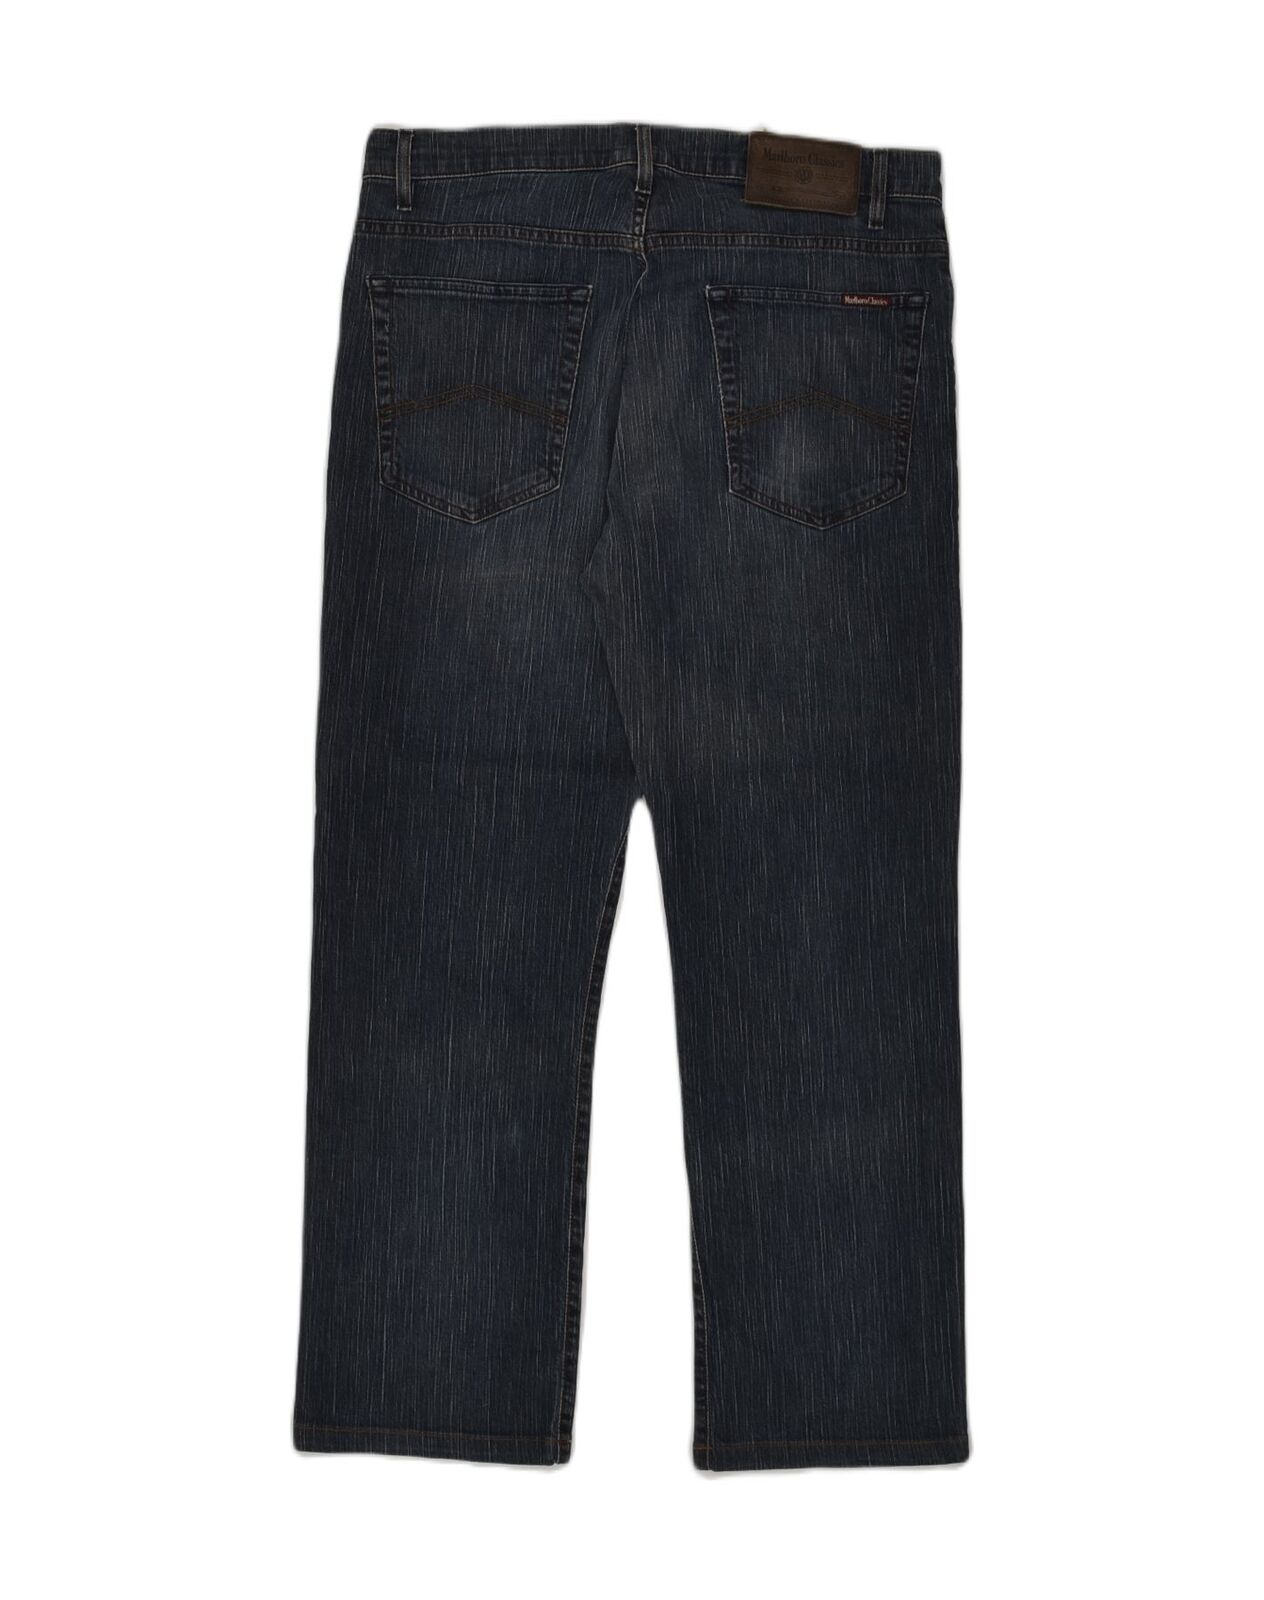 MARLBORO CLASSICS Mens Straight Jeans W36 L30 Nav… - image 2